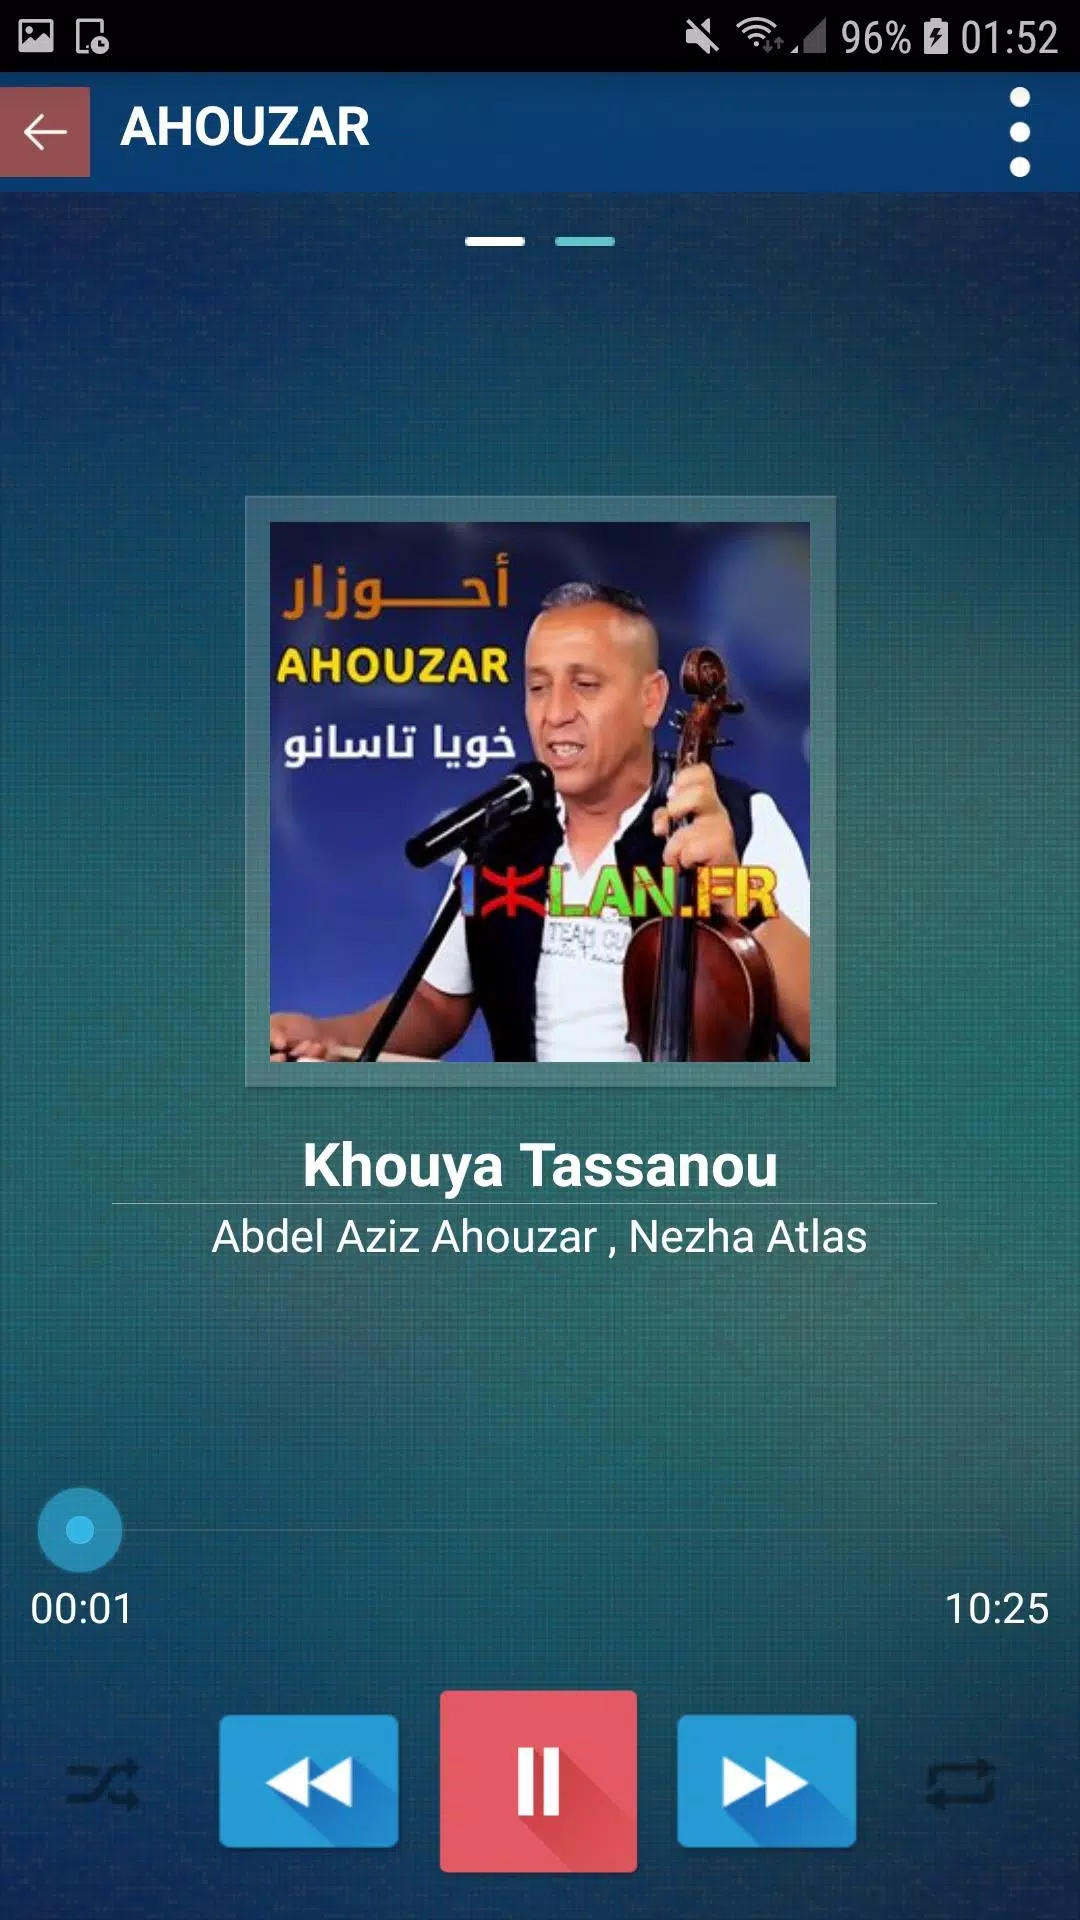 Ahouzar Abdelaziz 2019 APK for Android Download